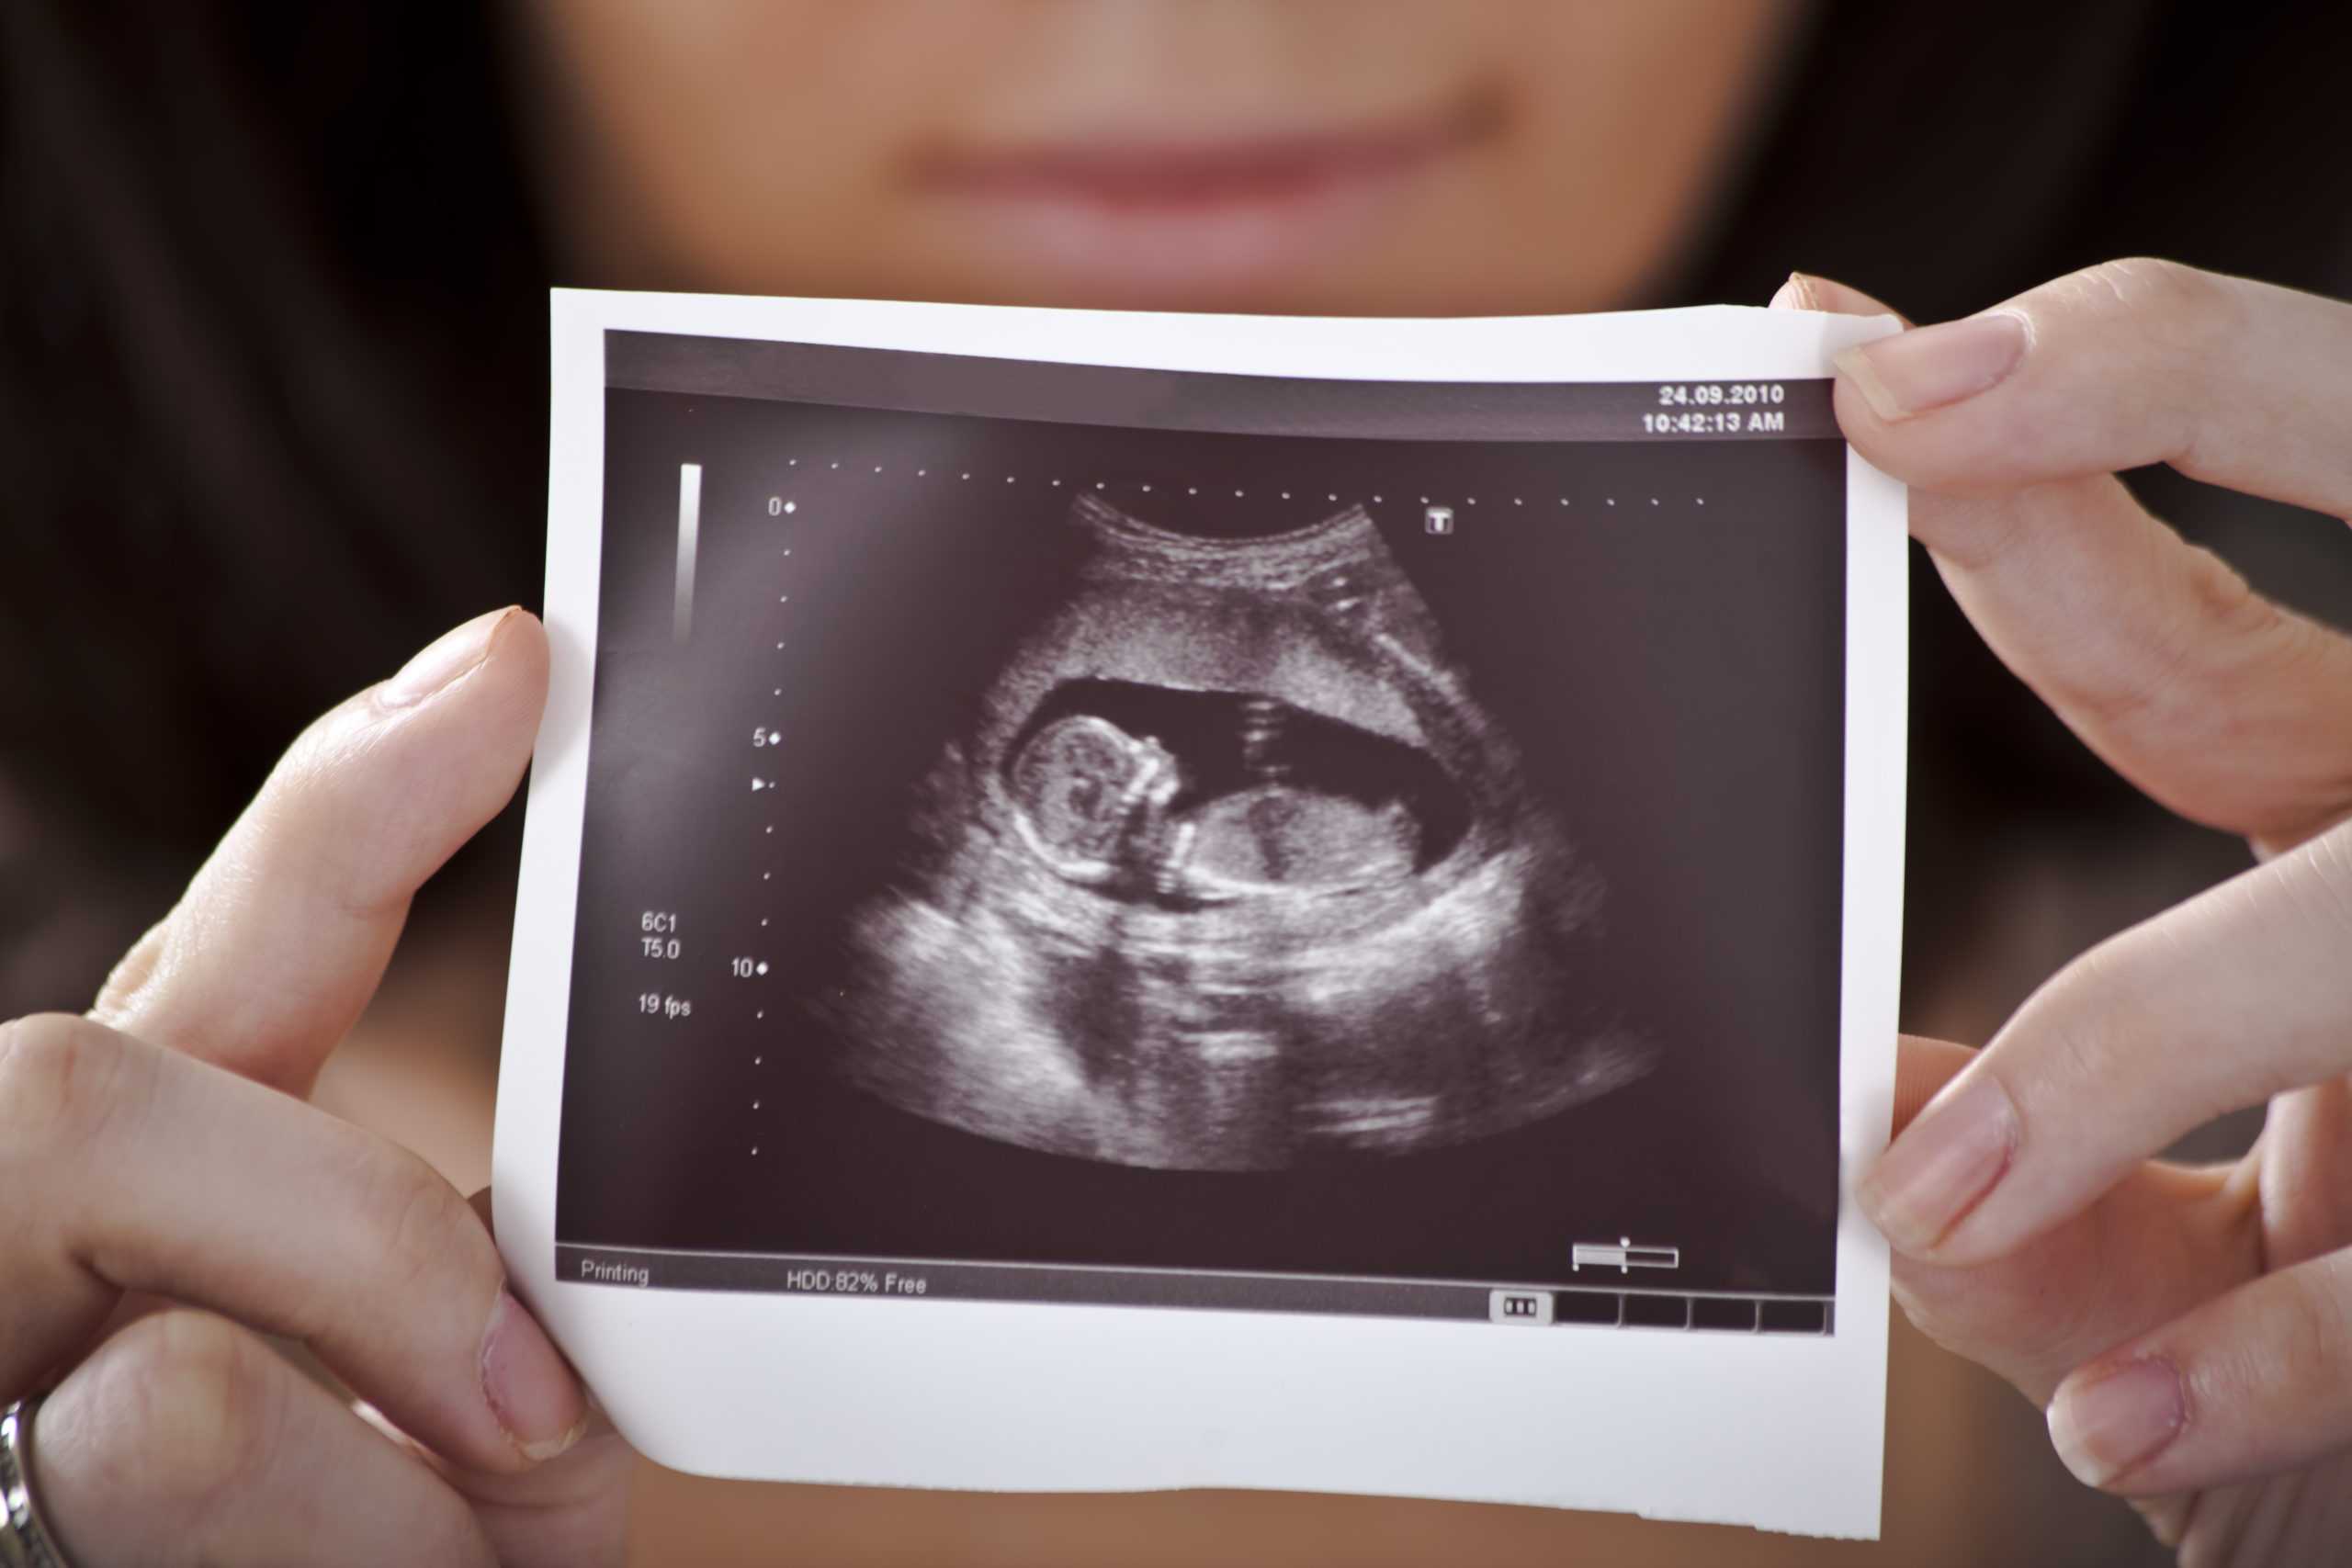 На каком сроке беременности делают фото узи